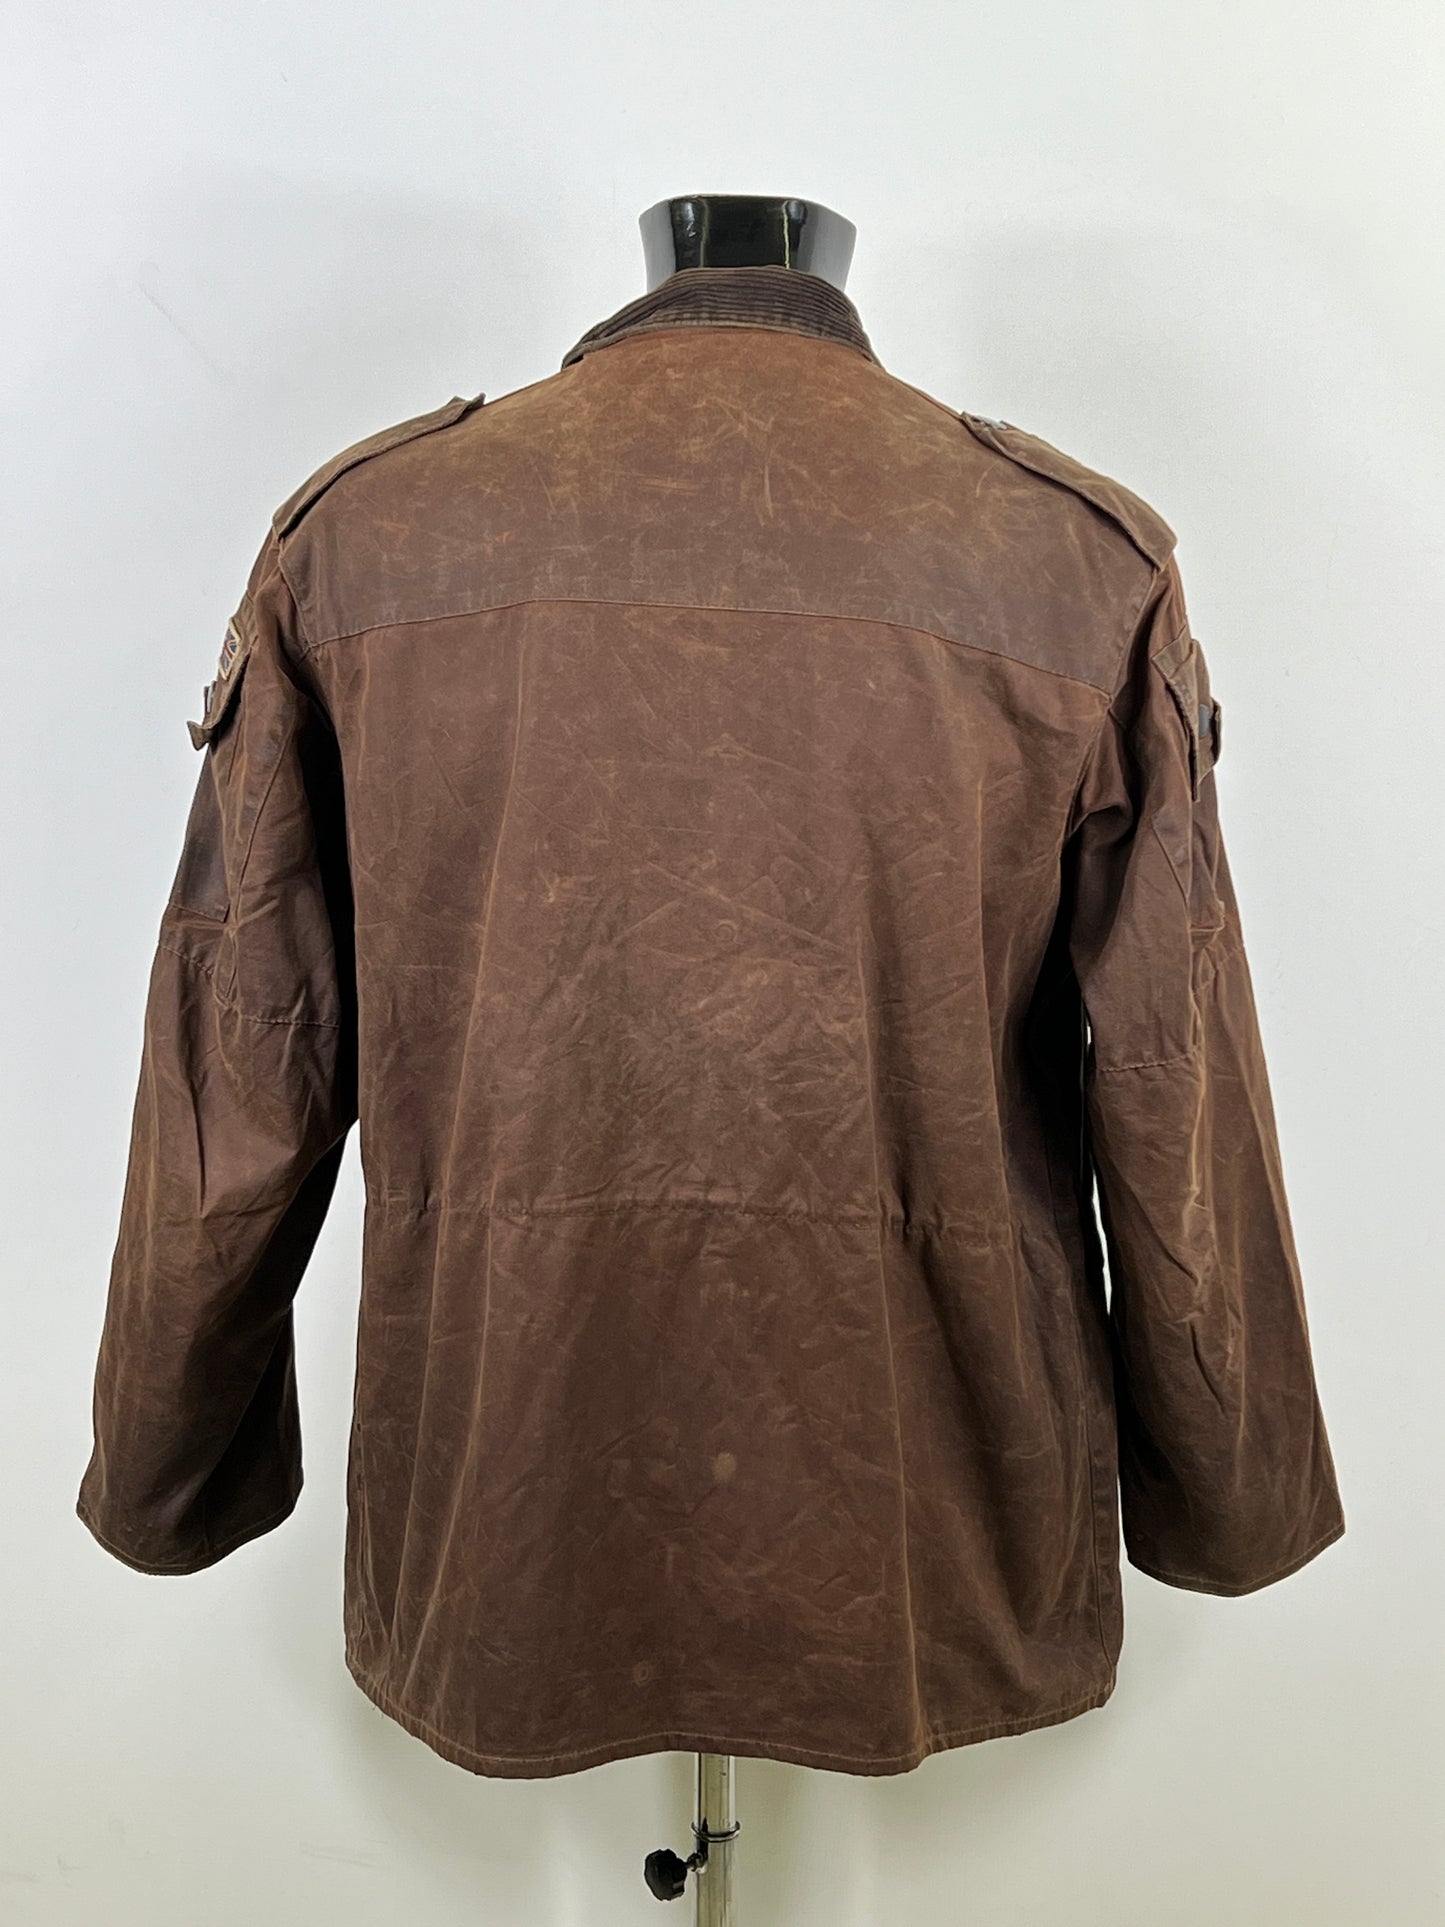 RARA Barbour Giacca Cowen Commando Marrone c40/102 cm Brown wax Man Jacket size M